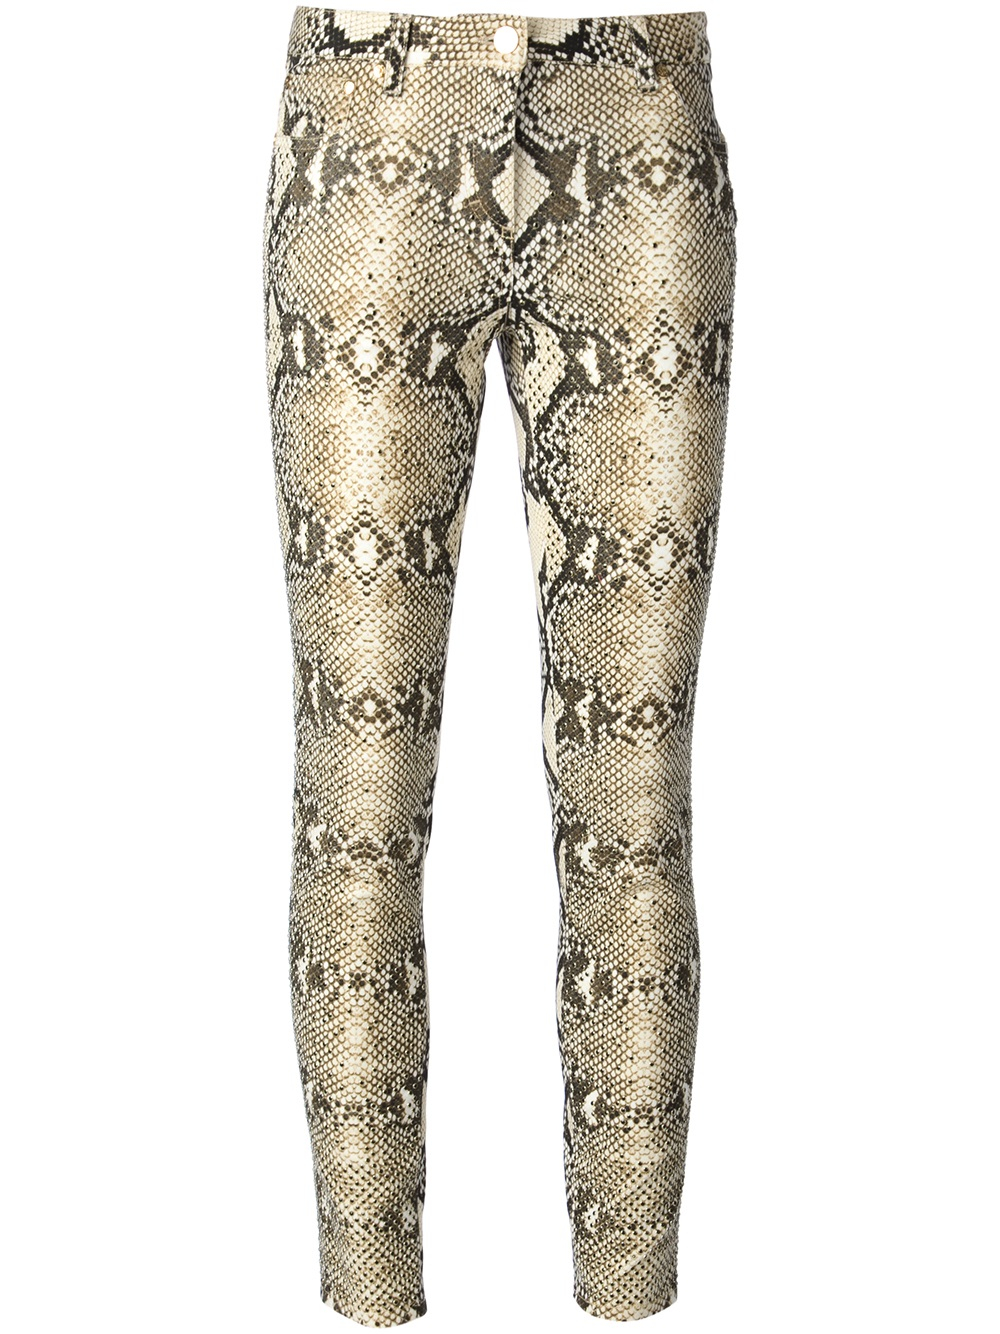 Roberto Cavalli Snakeskin Print Skinny Jeans in Brown | Lyst